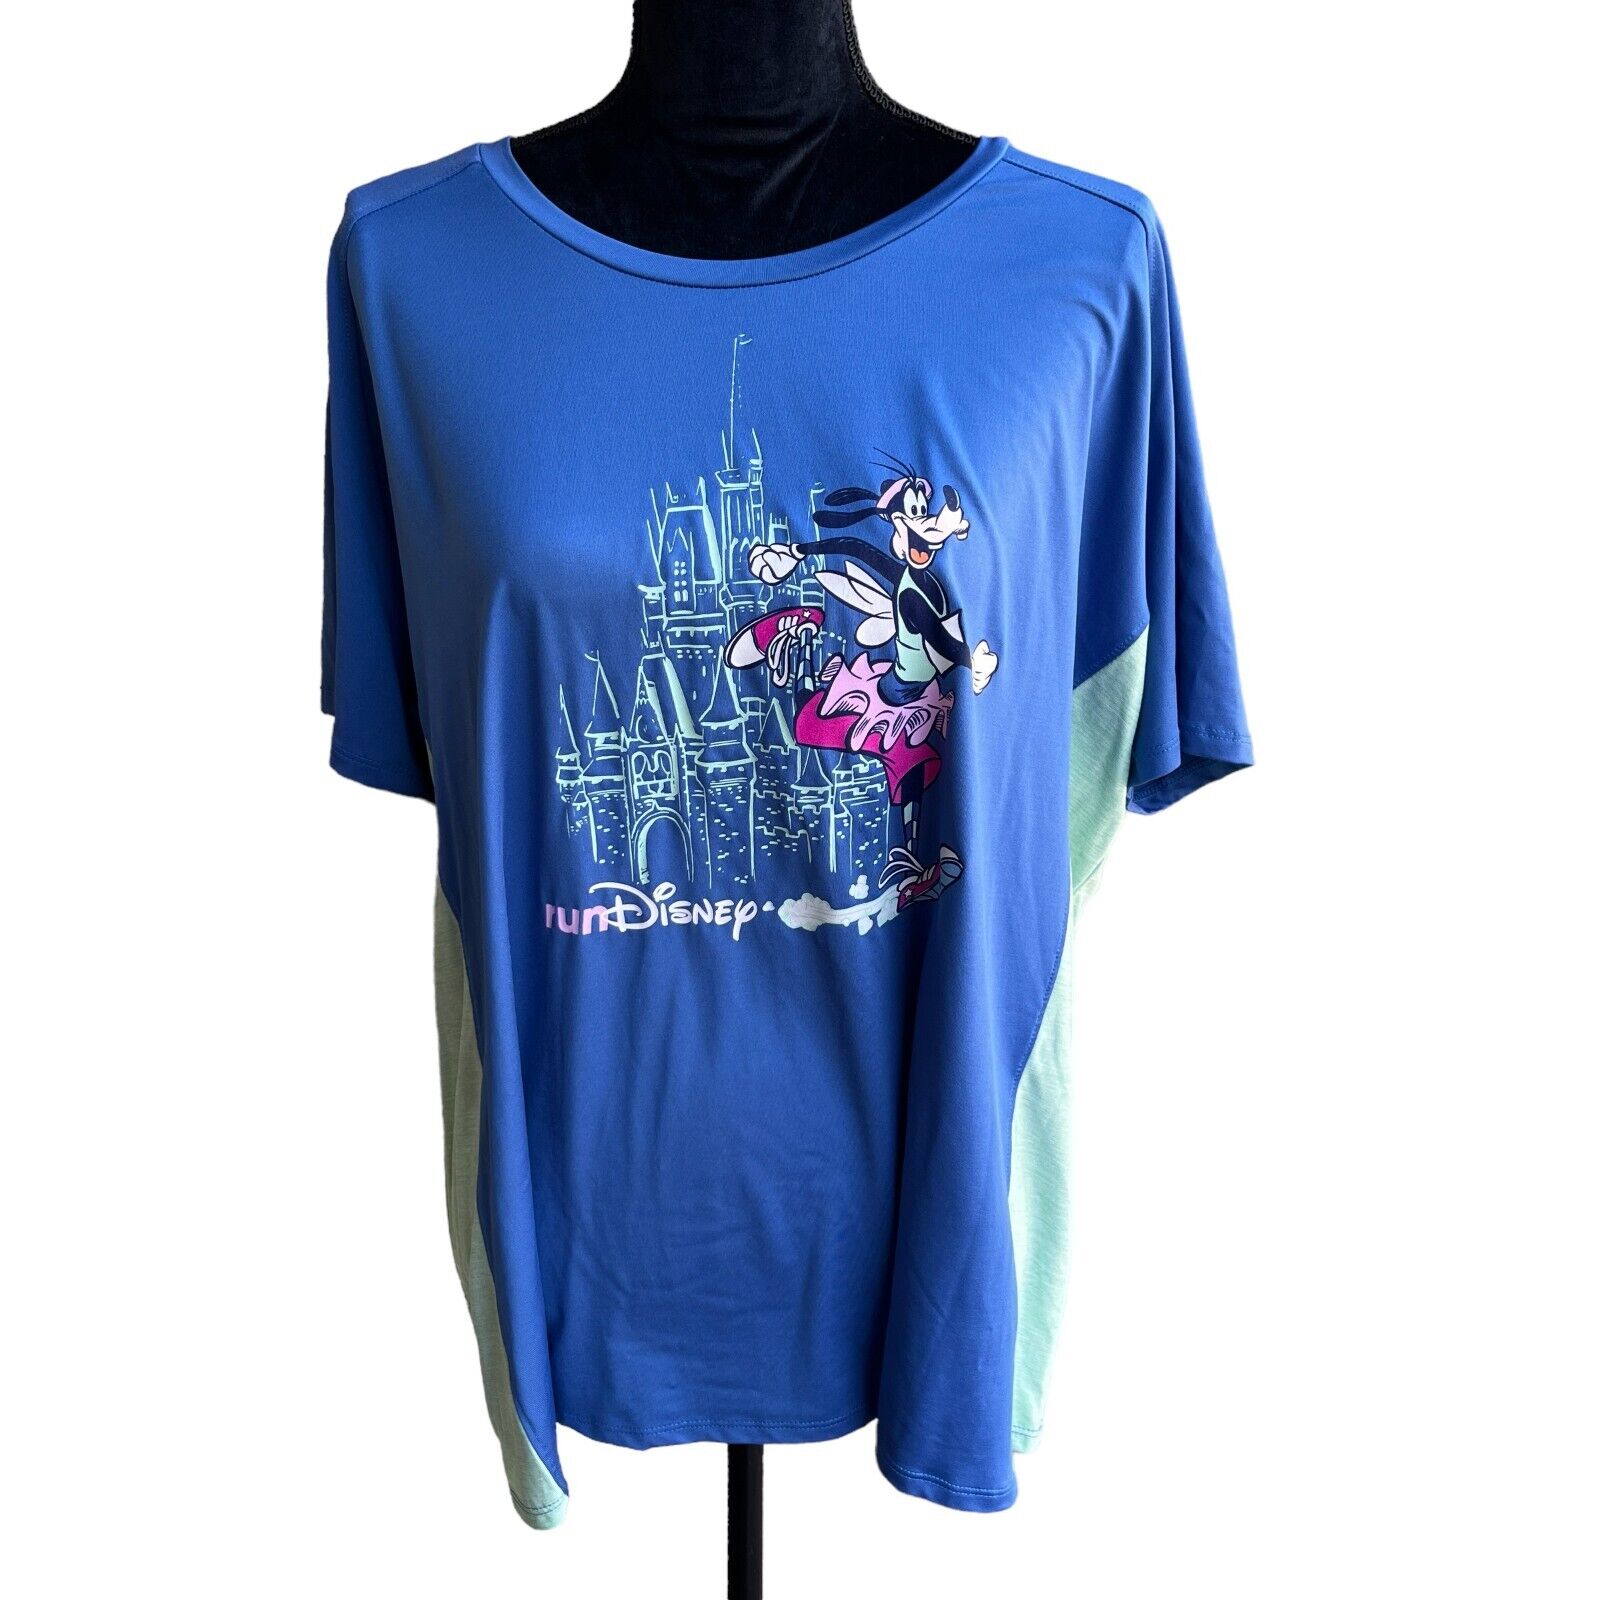 Disney Parks Run Disney Women\'s Performance Shirt XXXL Goofy in Tutu Blue 3XL